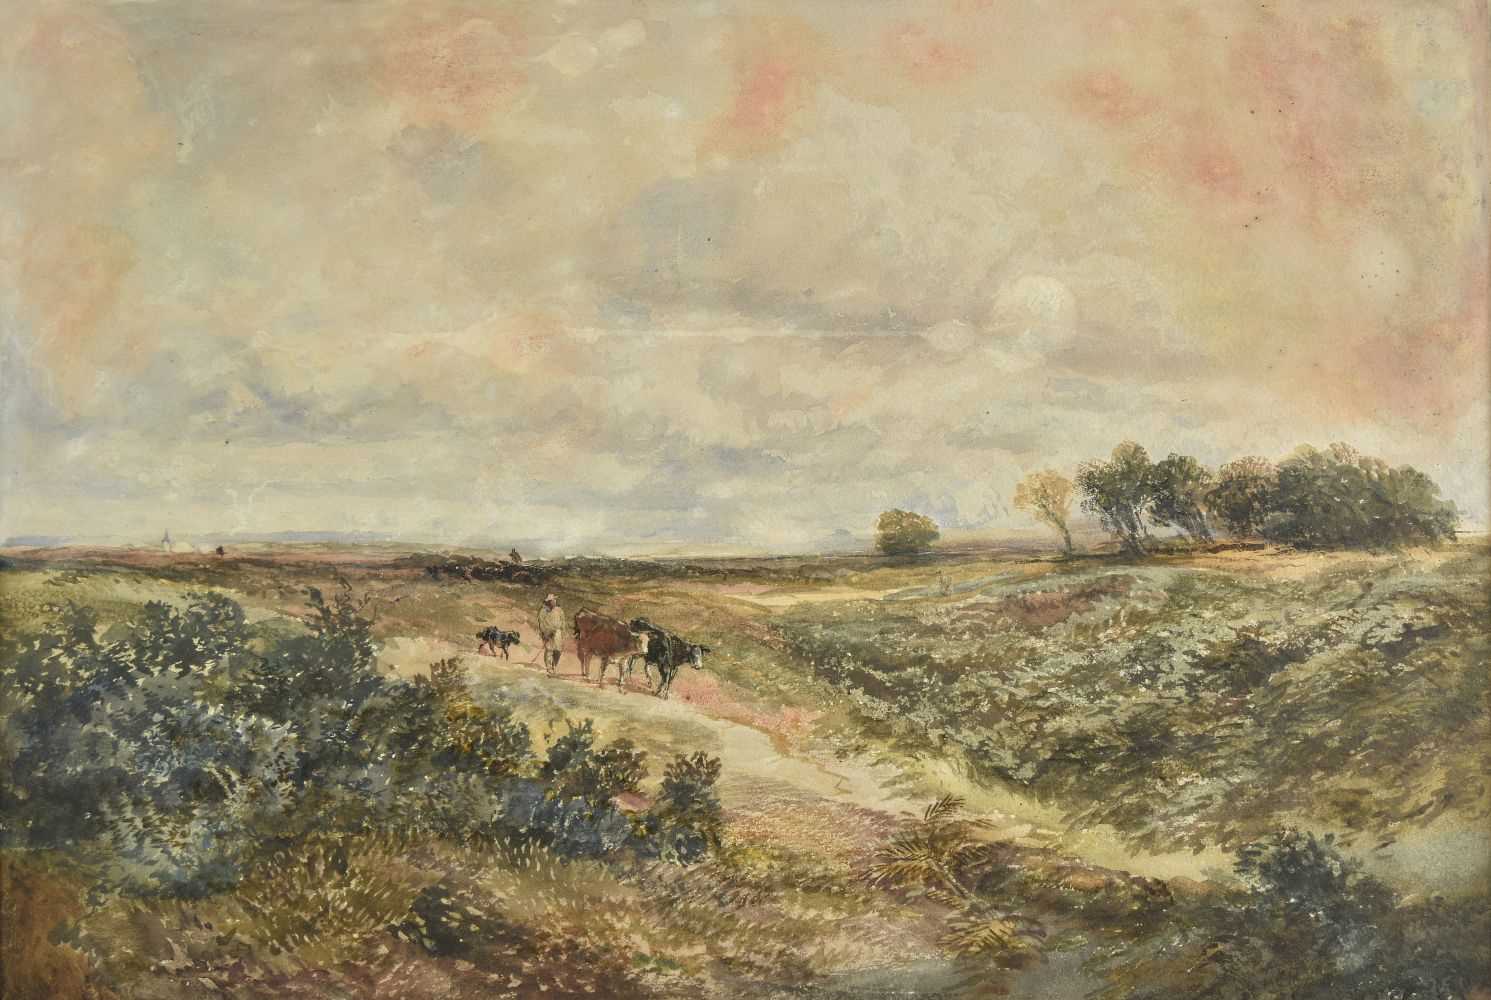 Lot 293 - Cox (David II, 1809-1885). Farmer herding cows in landscape, 1856